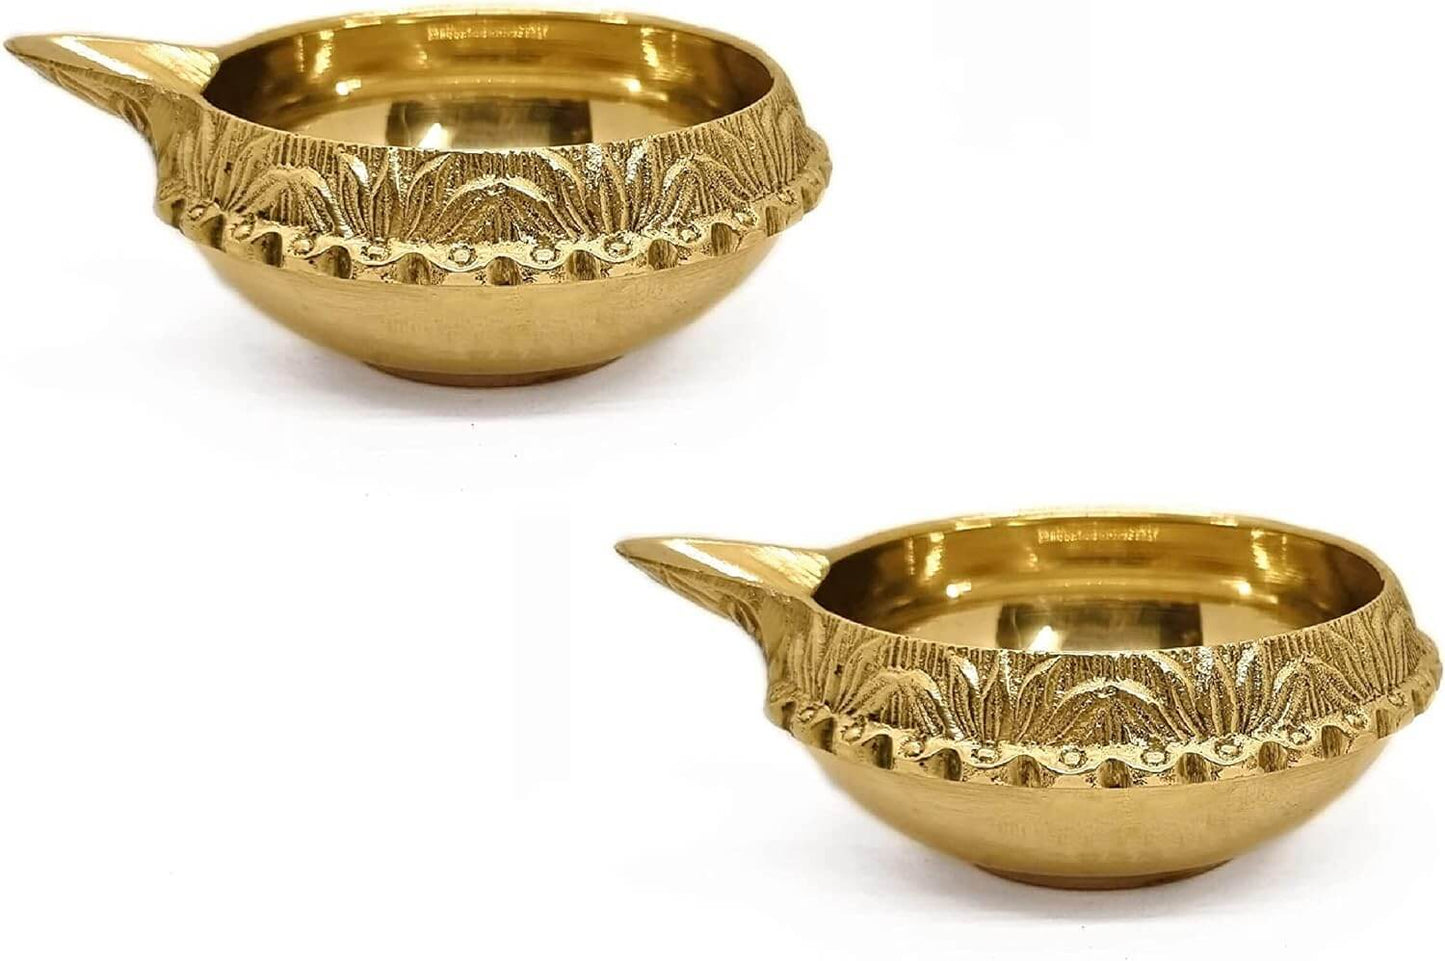 [2 Pieces] Kuber Diya for Home Decoration. Handmade Oil Lamp Golden Engraved Made of Virgin Brass Metal Vilakku for Puja Pooja. Traditional Diwali Indian Housewarming Return Gift Items